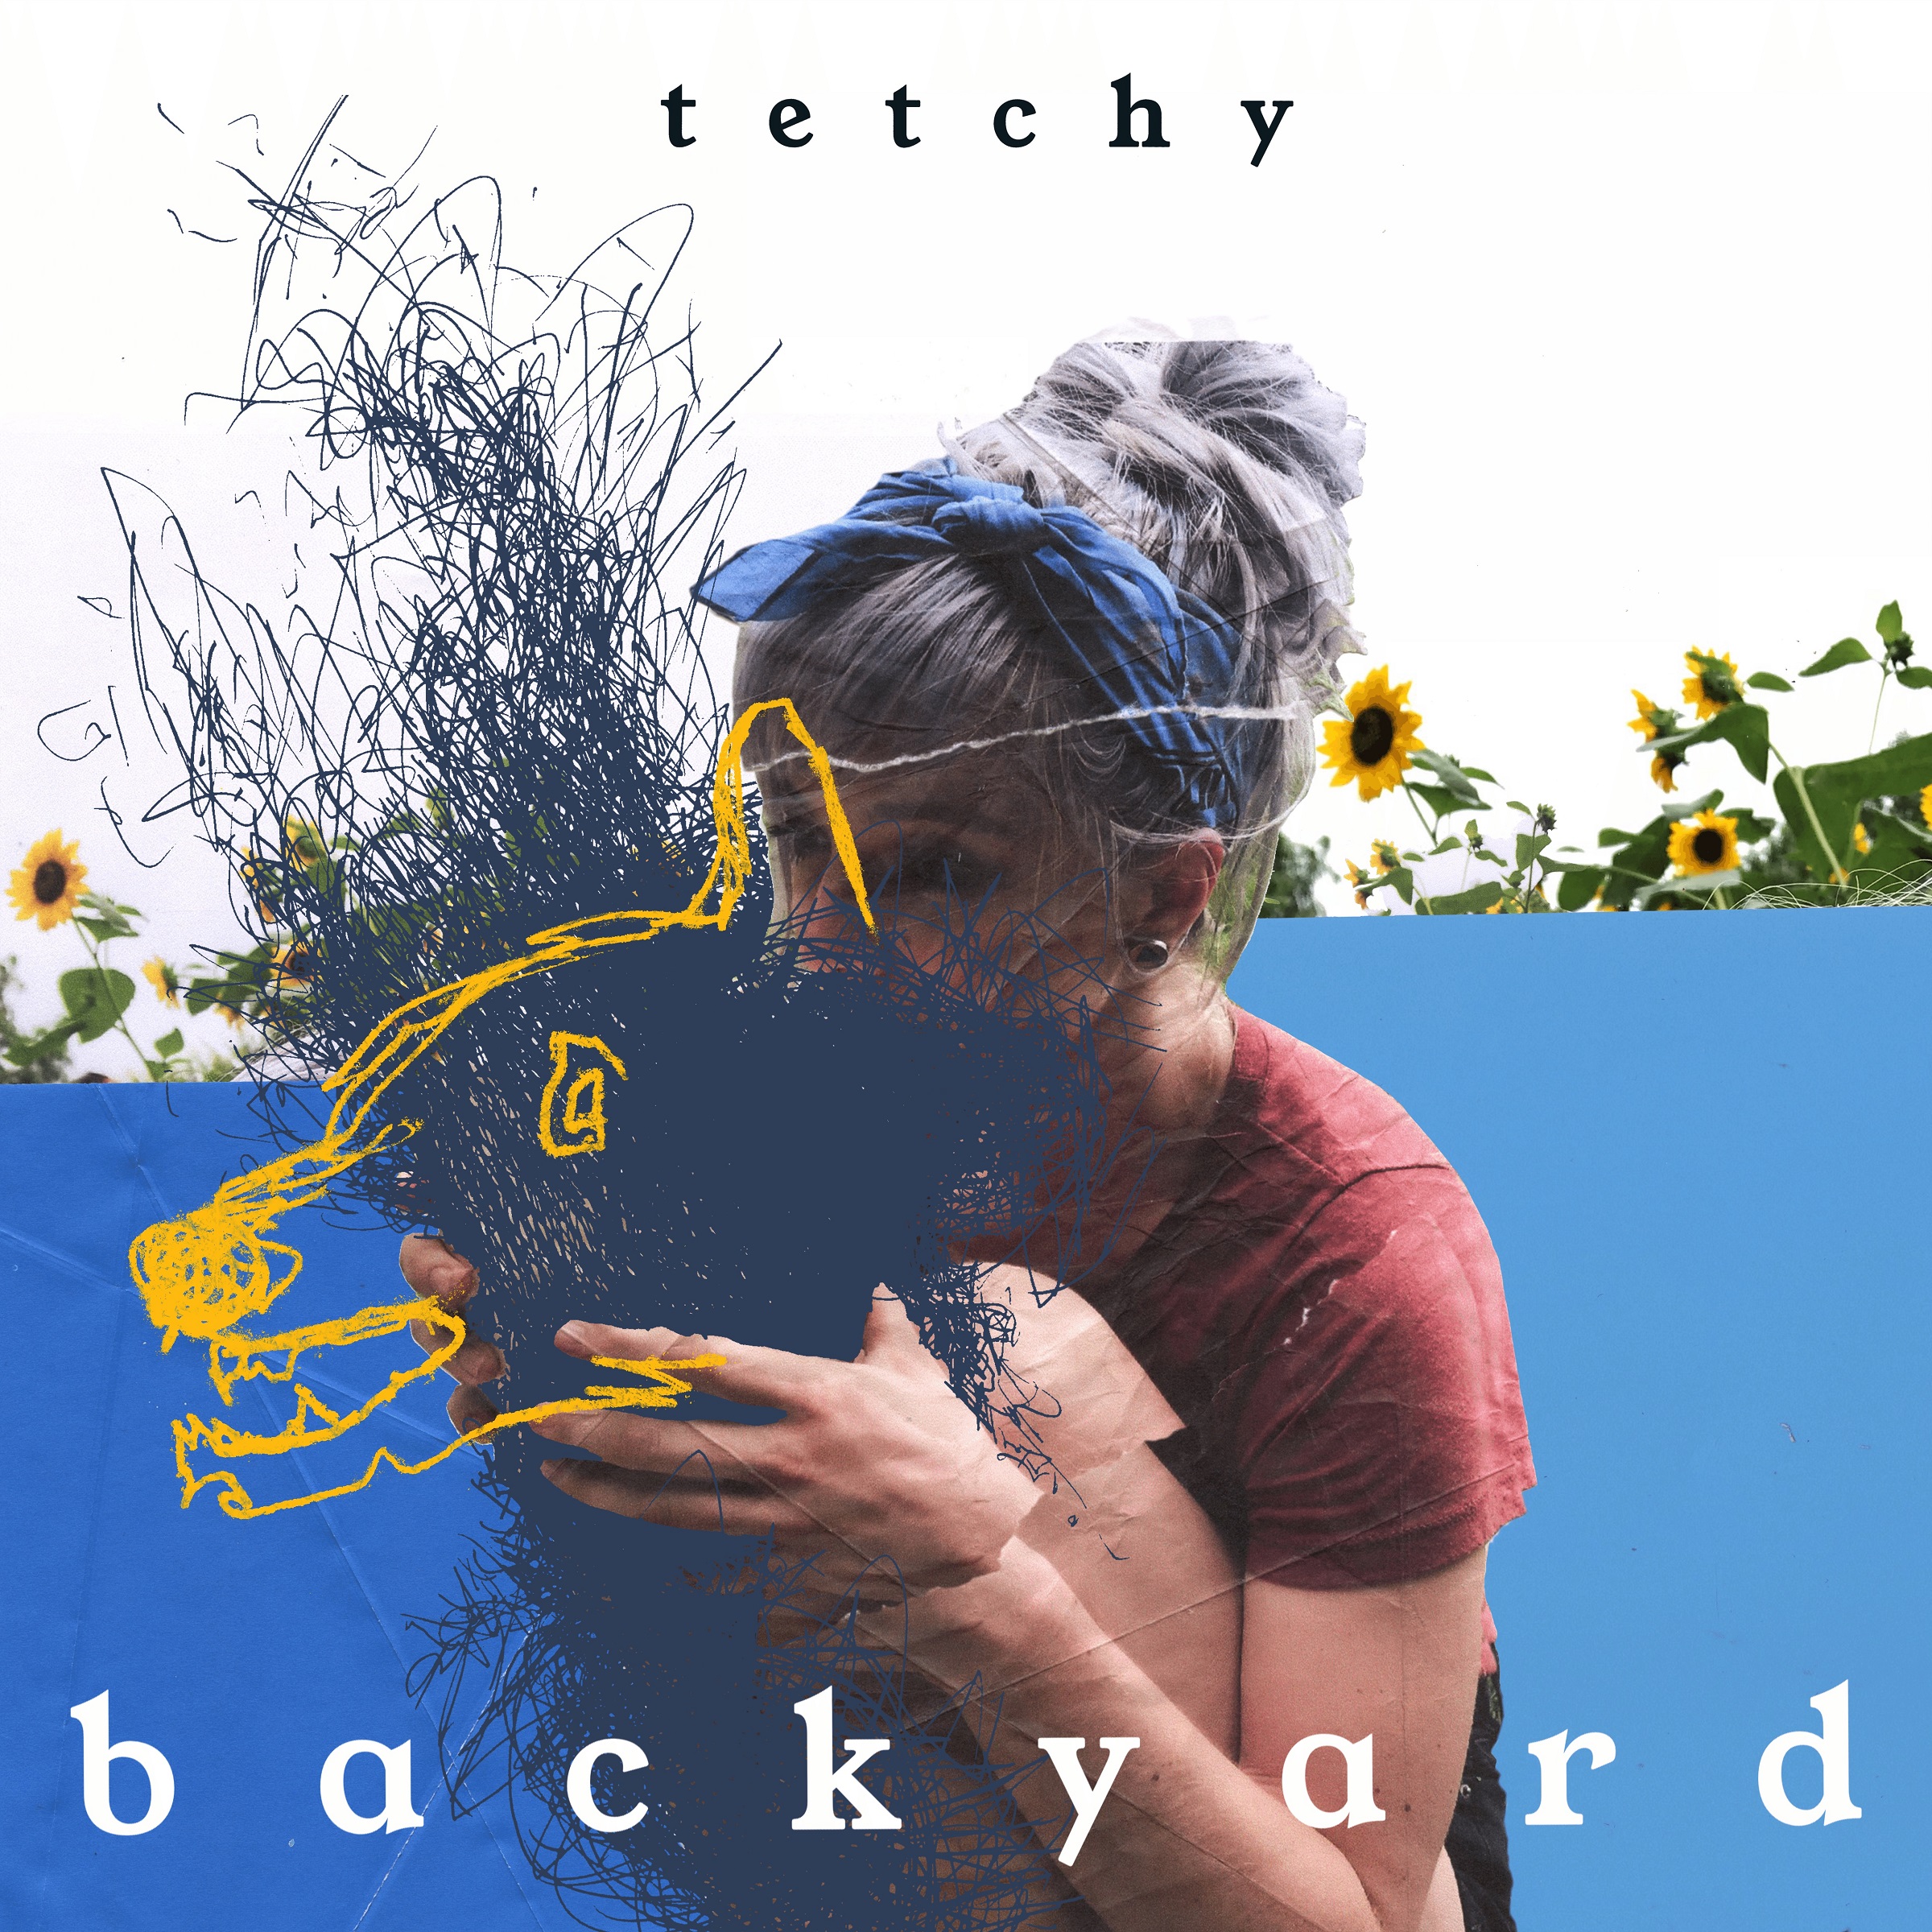 Artwork for 'Backyard' by Tetchy